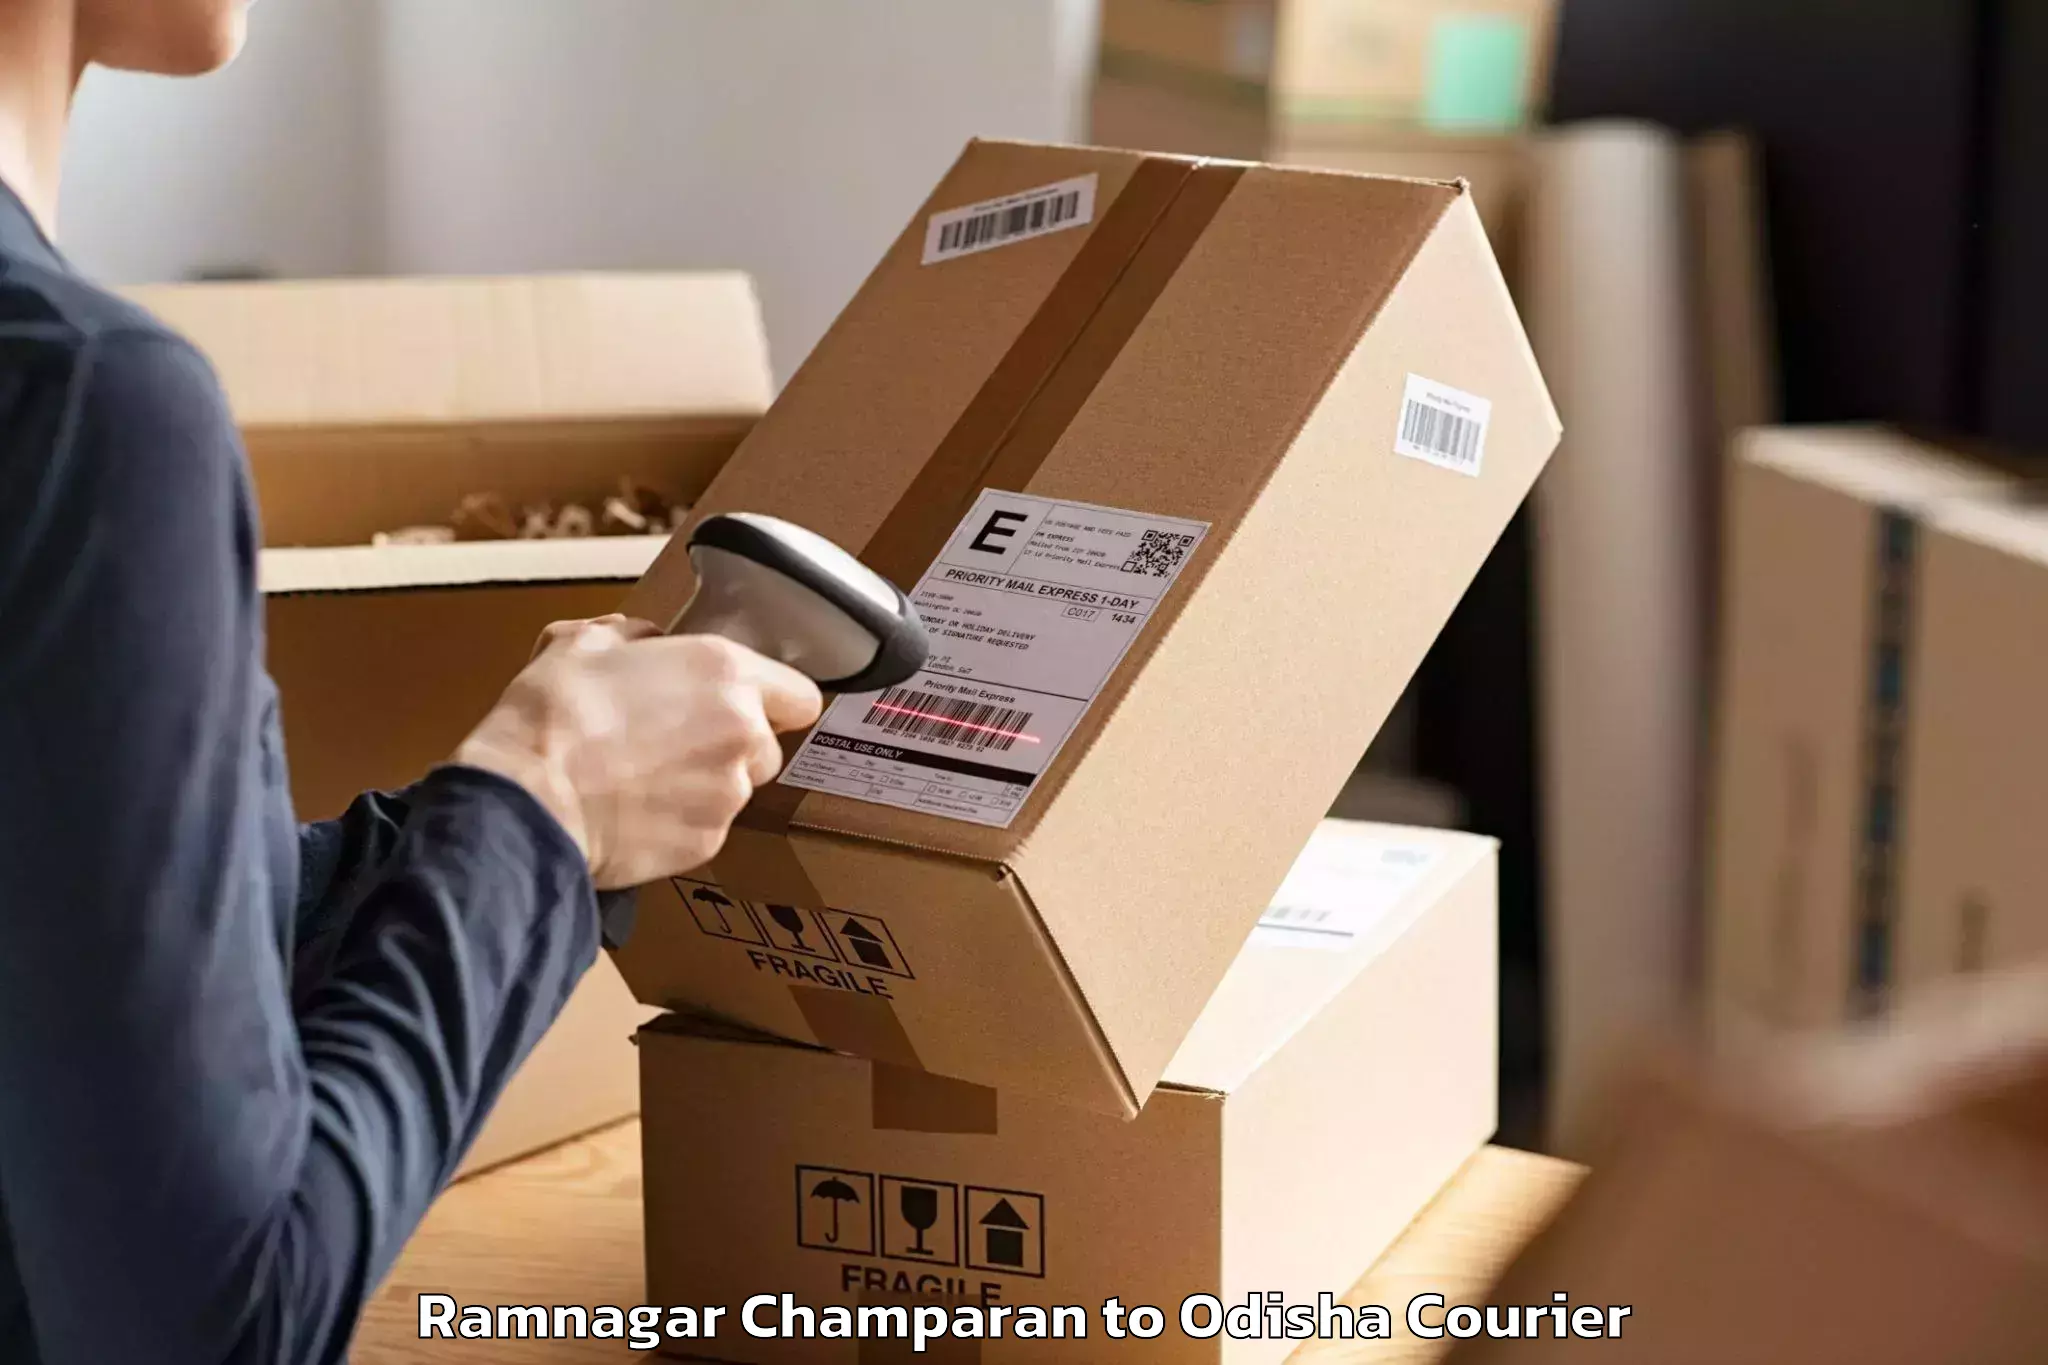 Moving and storage services Ramnagar Champaran to Baleswar